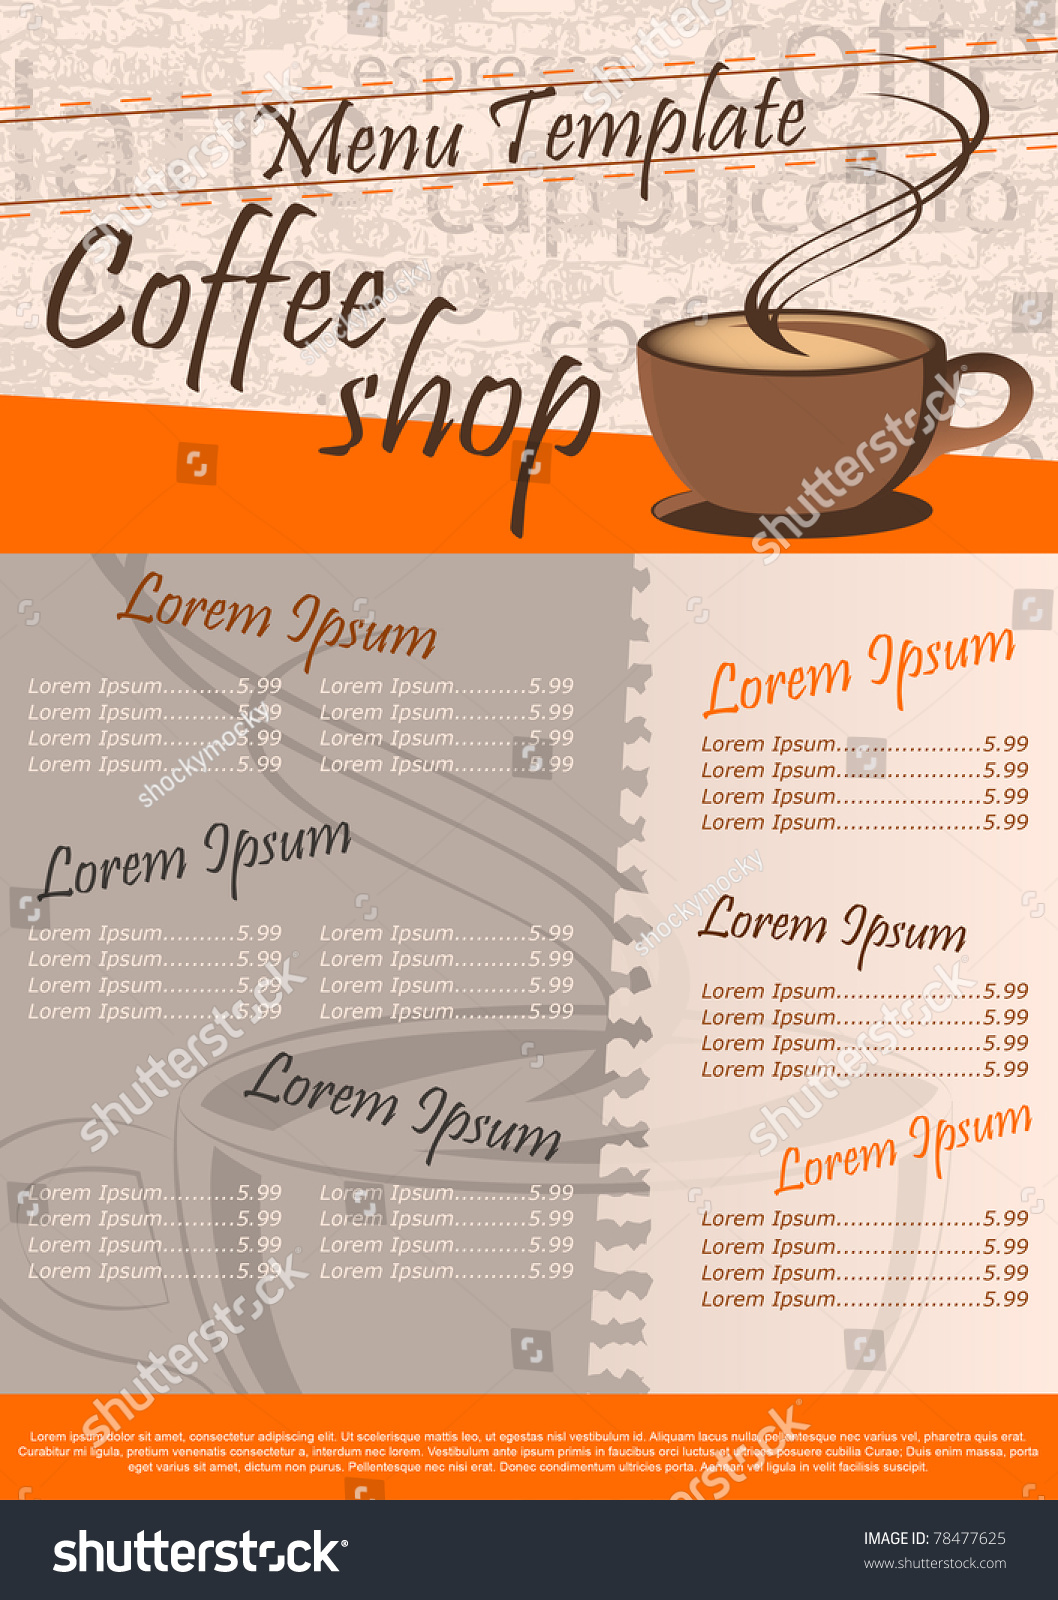 coffee shop menu template vector illustration stock vector